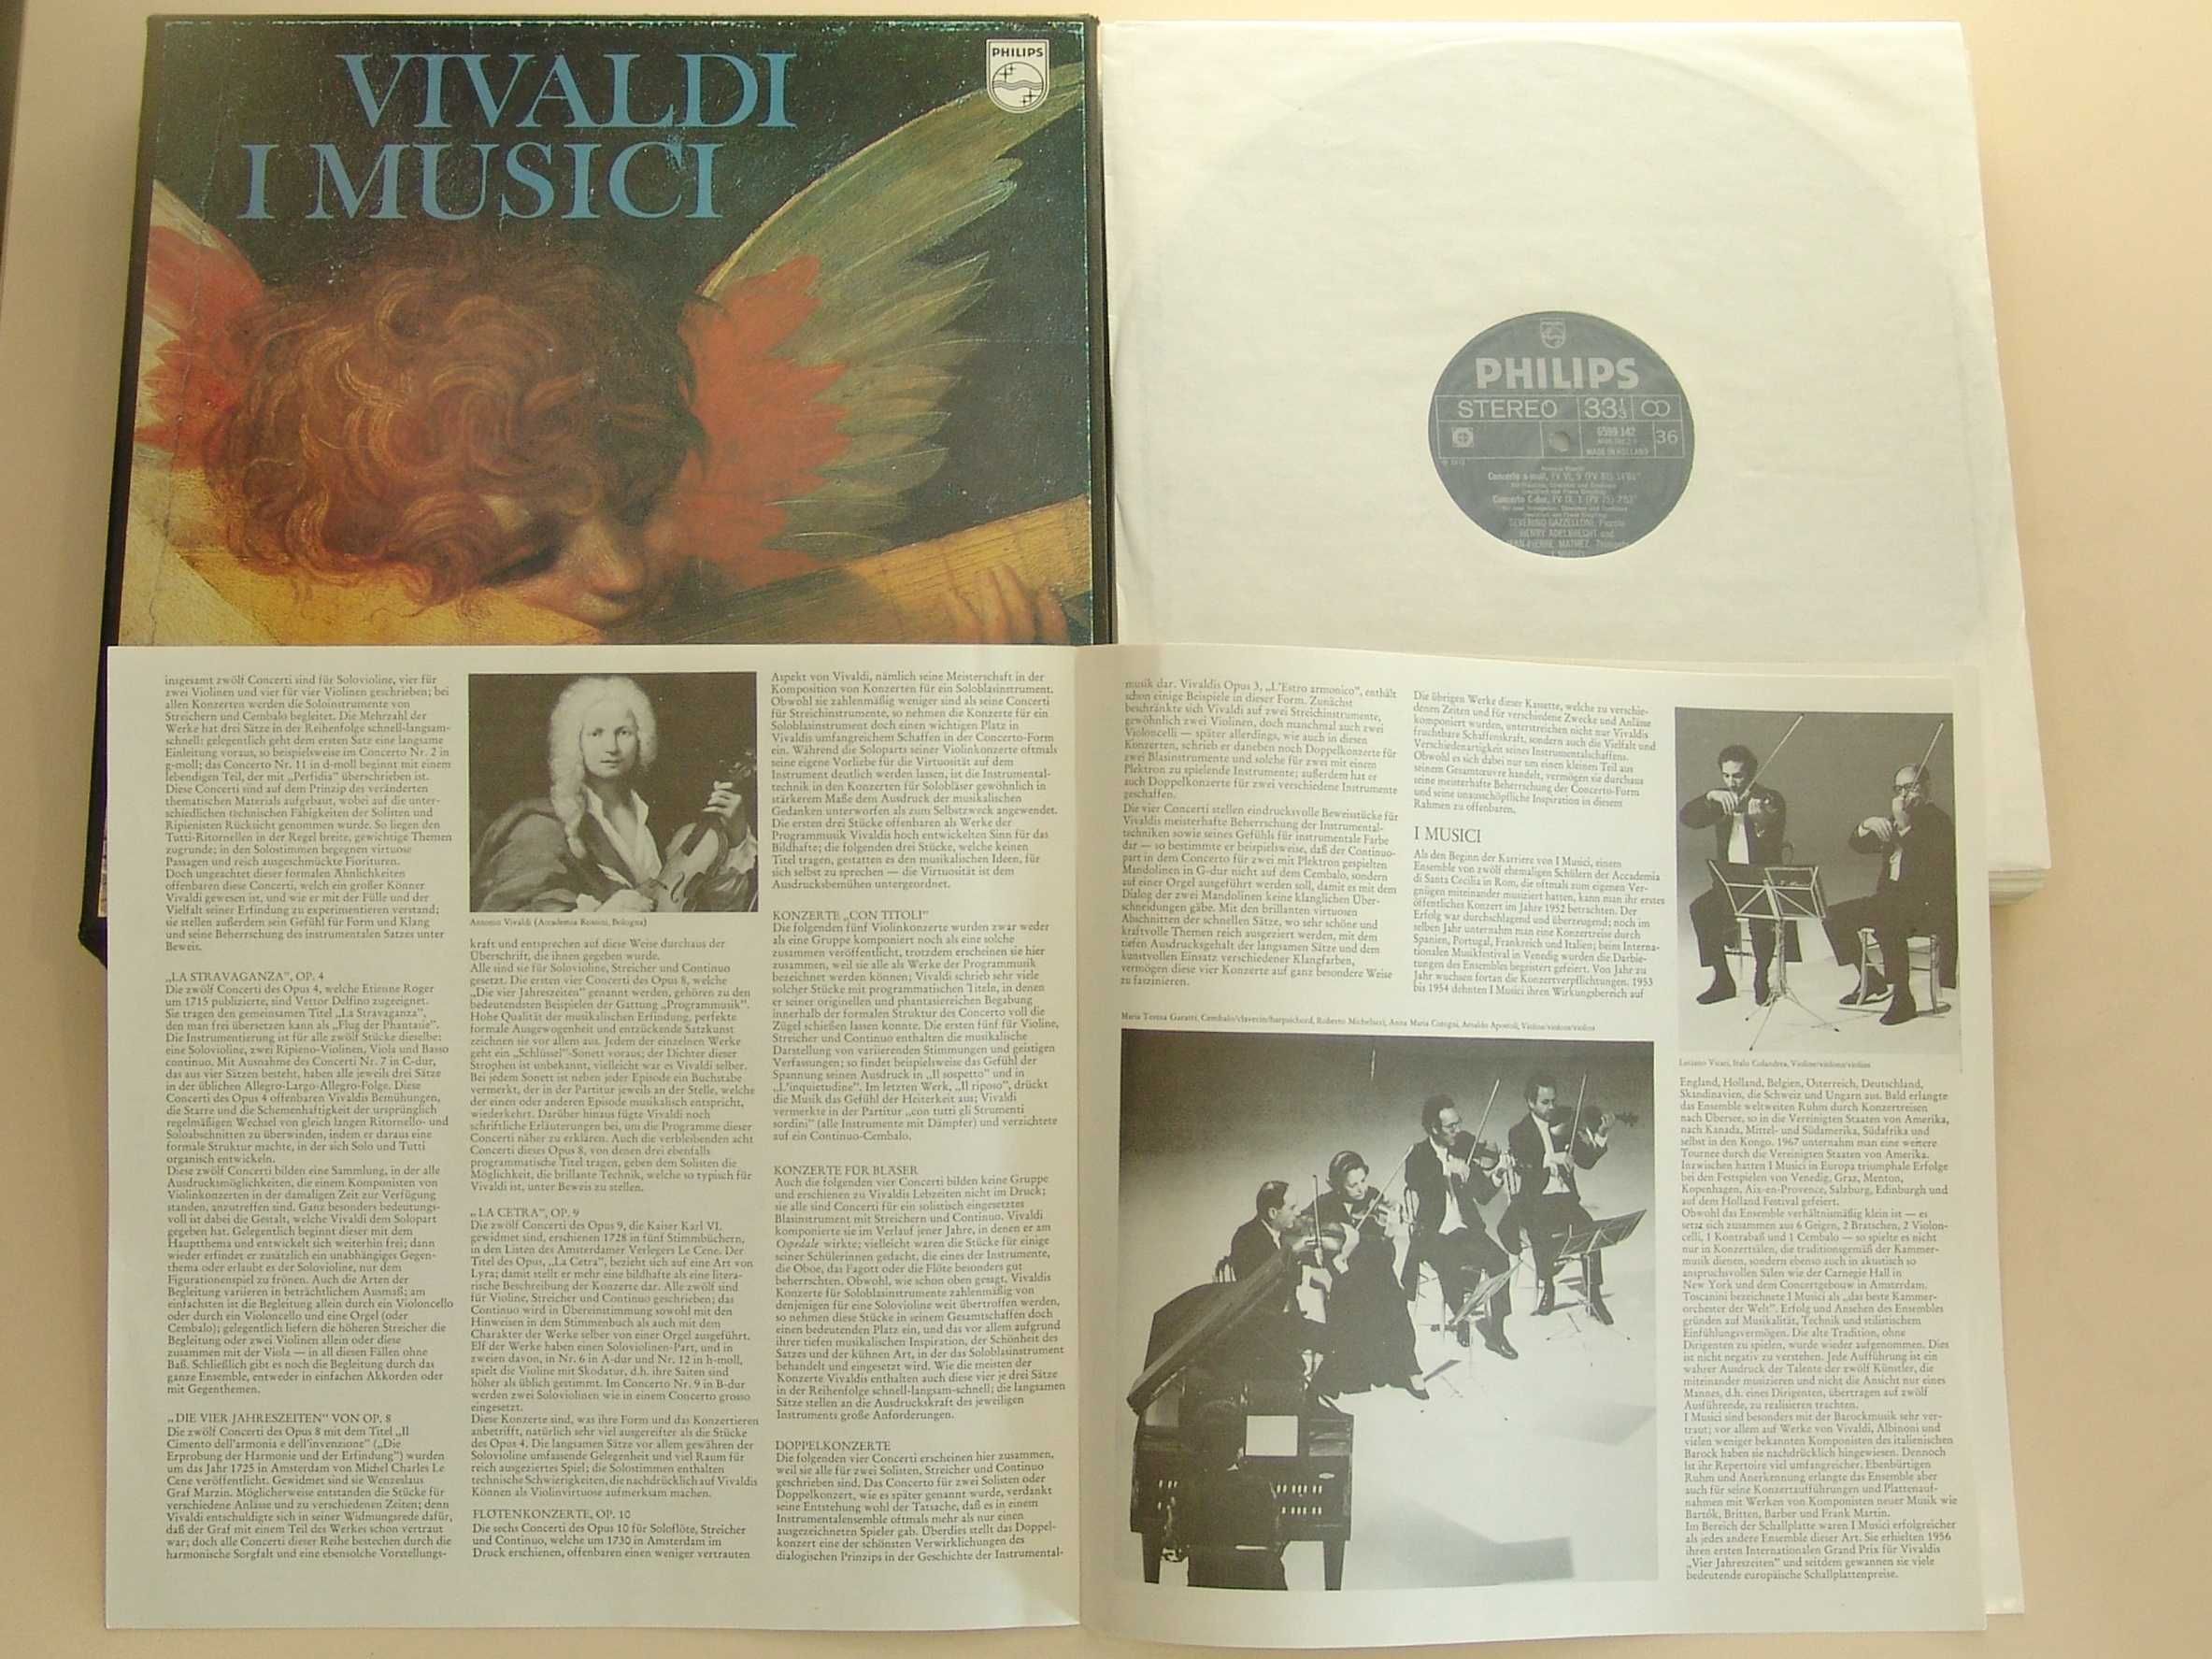 18 пластинок "Vivaldi" I Musici 1974 г. 150 грн. - 1 шт.  Philips